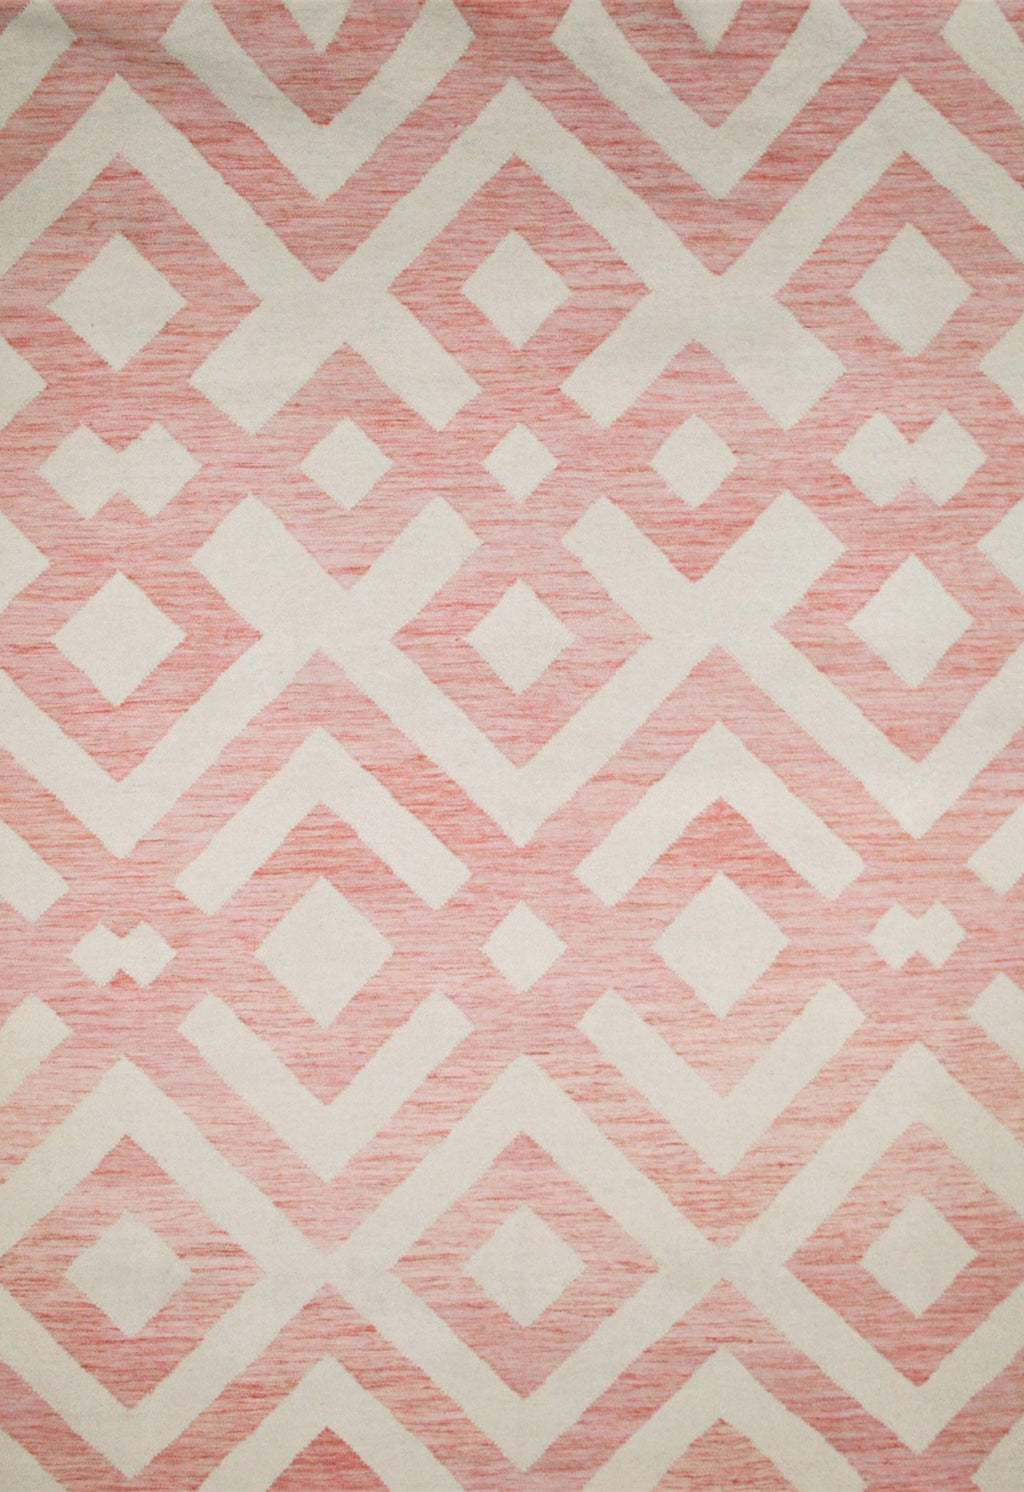 pink geometric rug in modern style